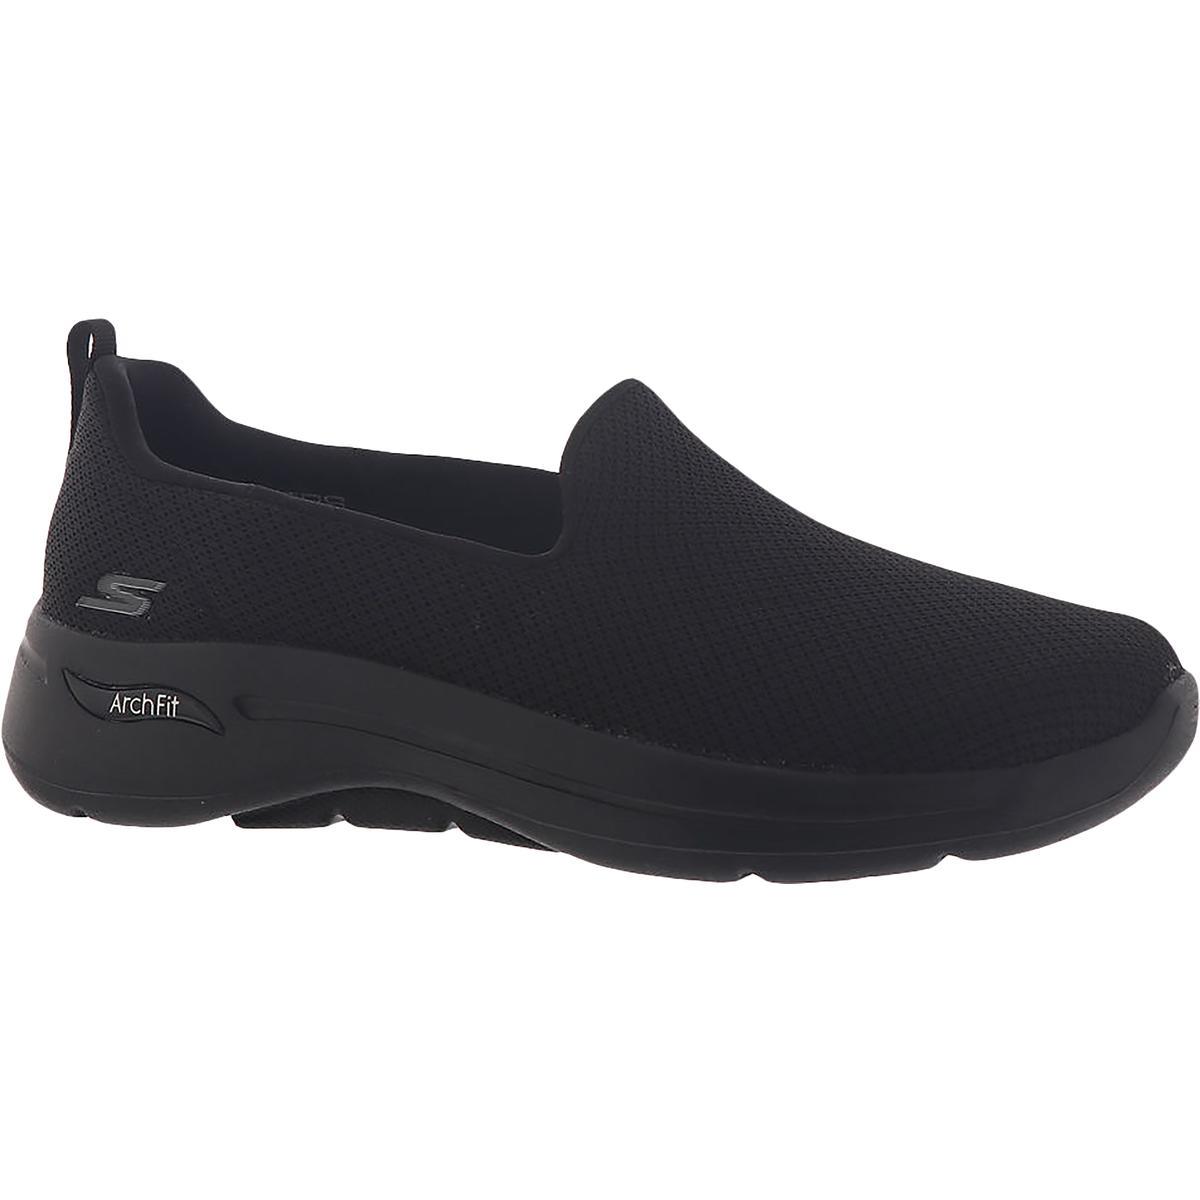 Skechers Womens Go Walk Arch Fit-grateful Slip-on Sneakers Shoes Bhfo 6237 Black